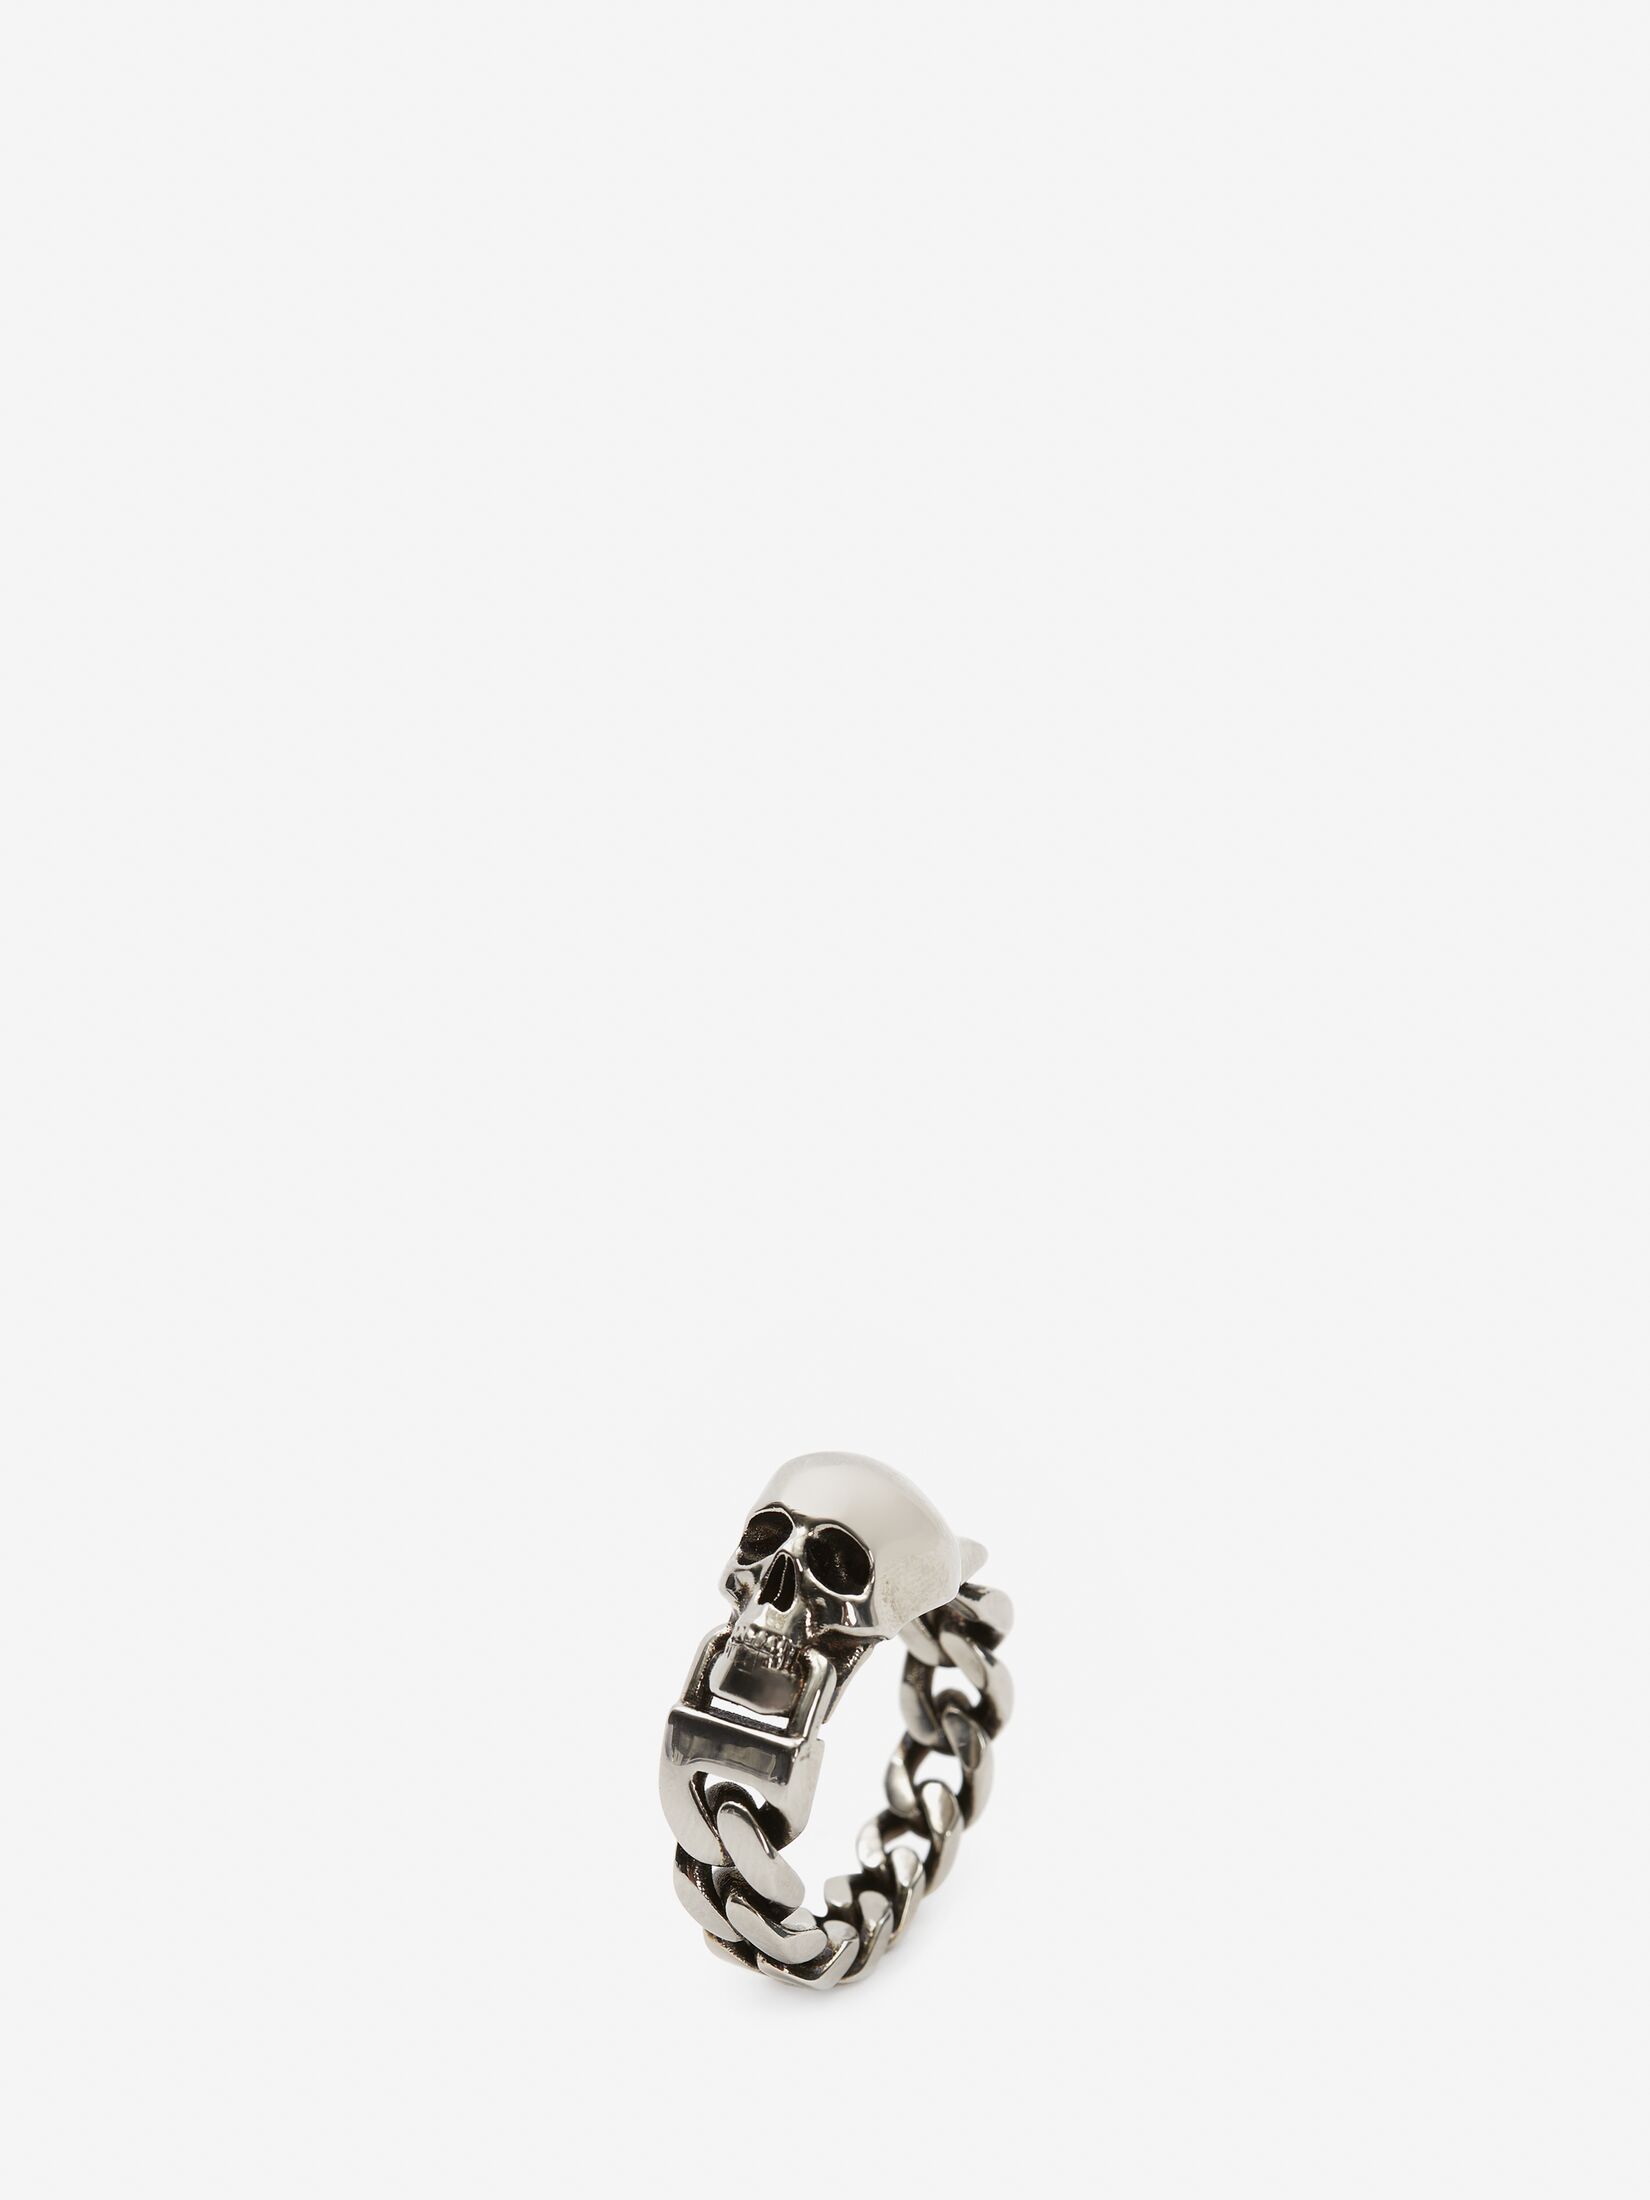 Skull Chain Ring